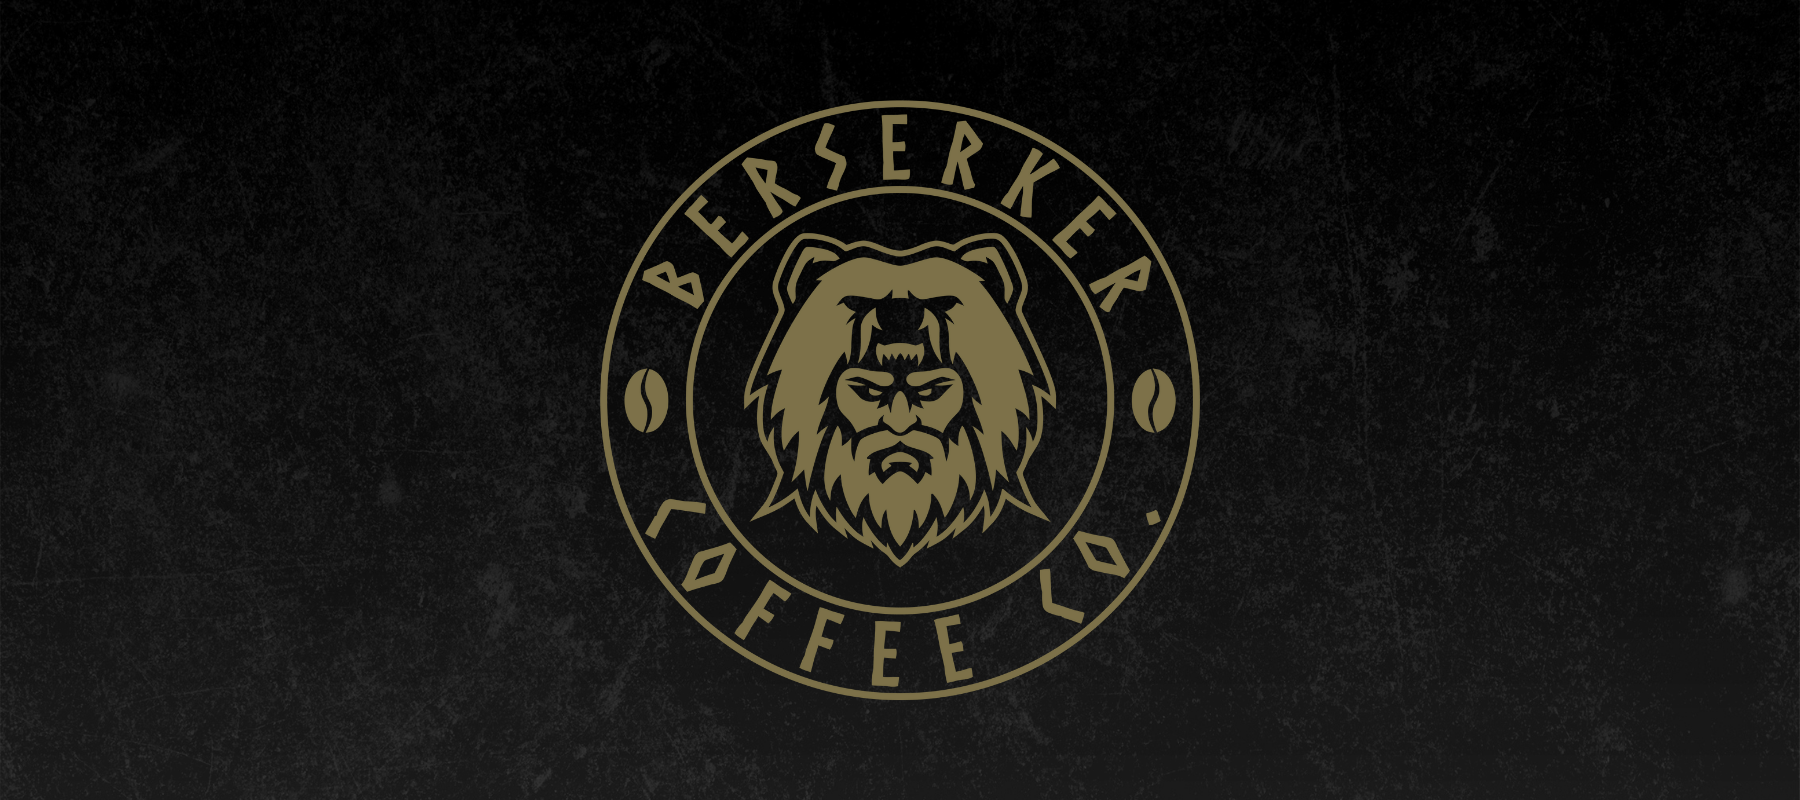 Die Top 10 Kaffee Sprüche der Berserker Coffee Company